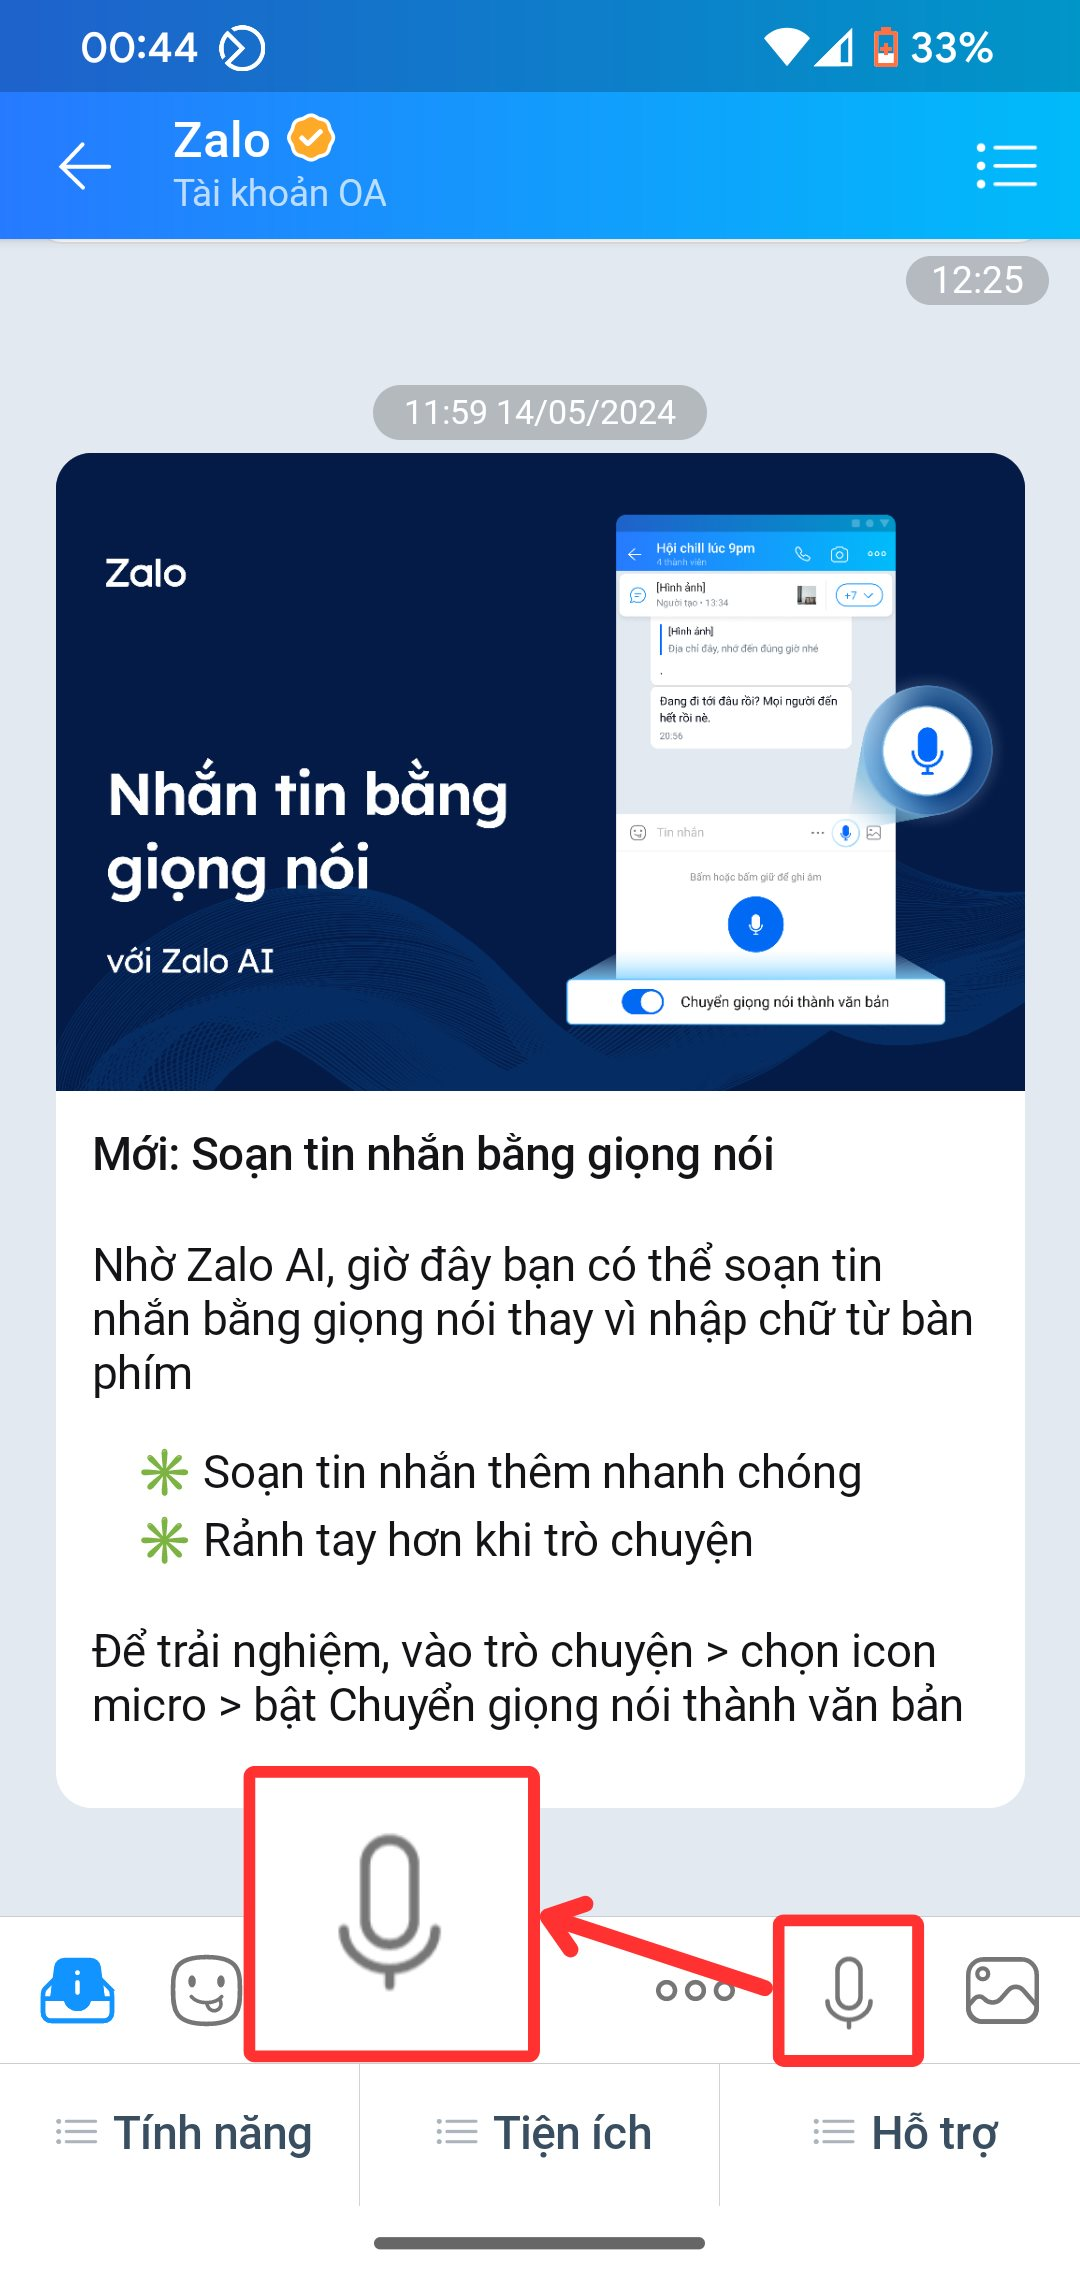 nhan-tin-bang-giong-noi-zalo-1.png